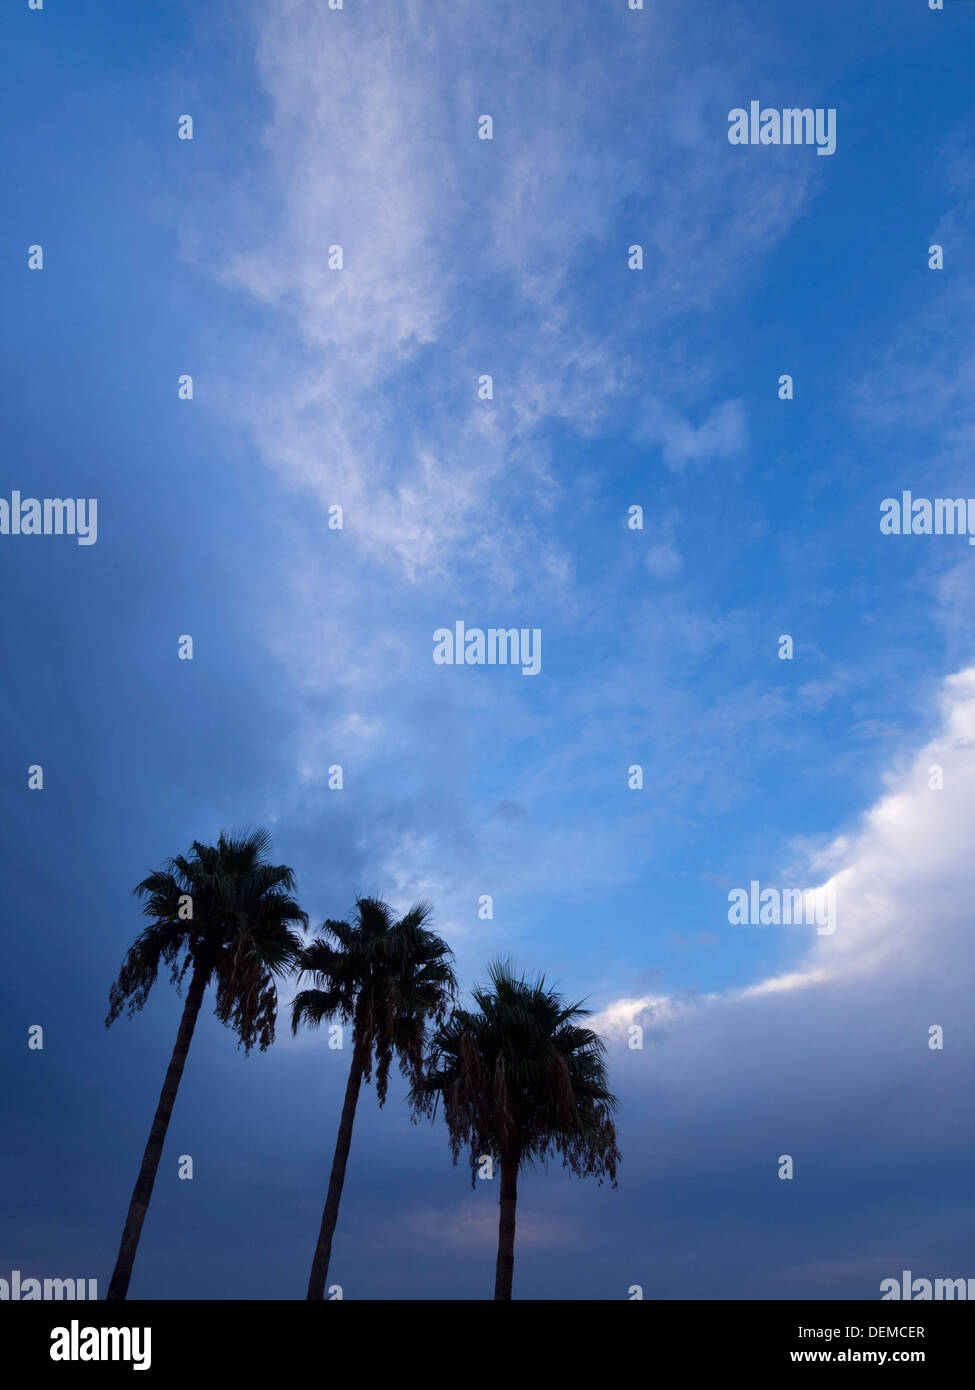 Trois palmiers silhouetted against a blue sky Banque D'Images